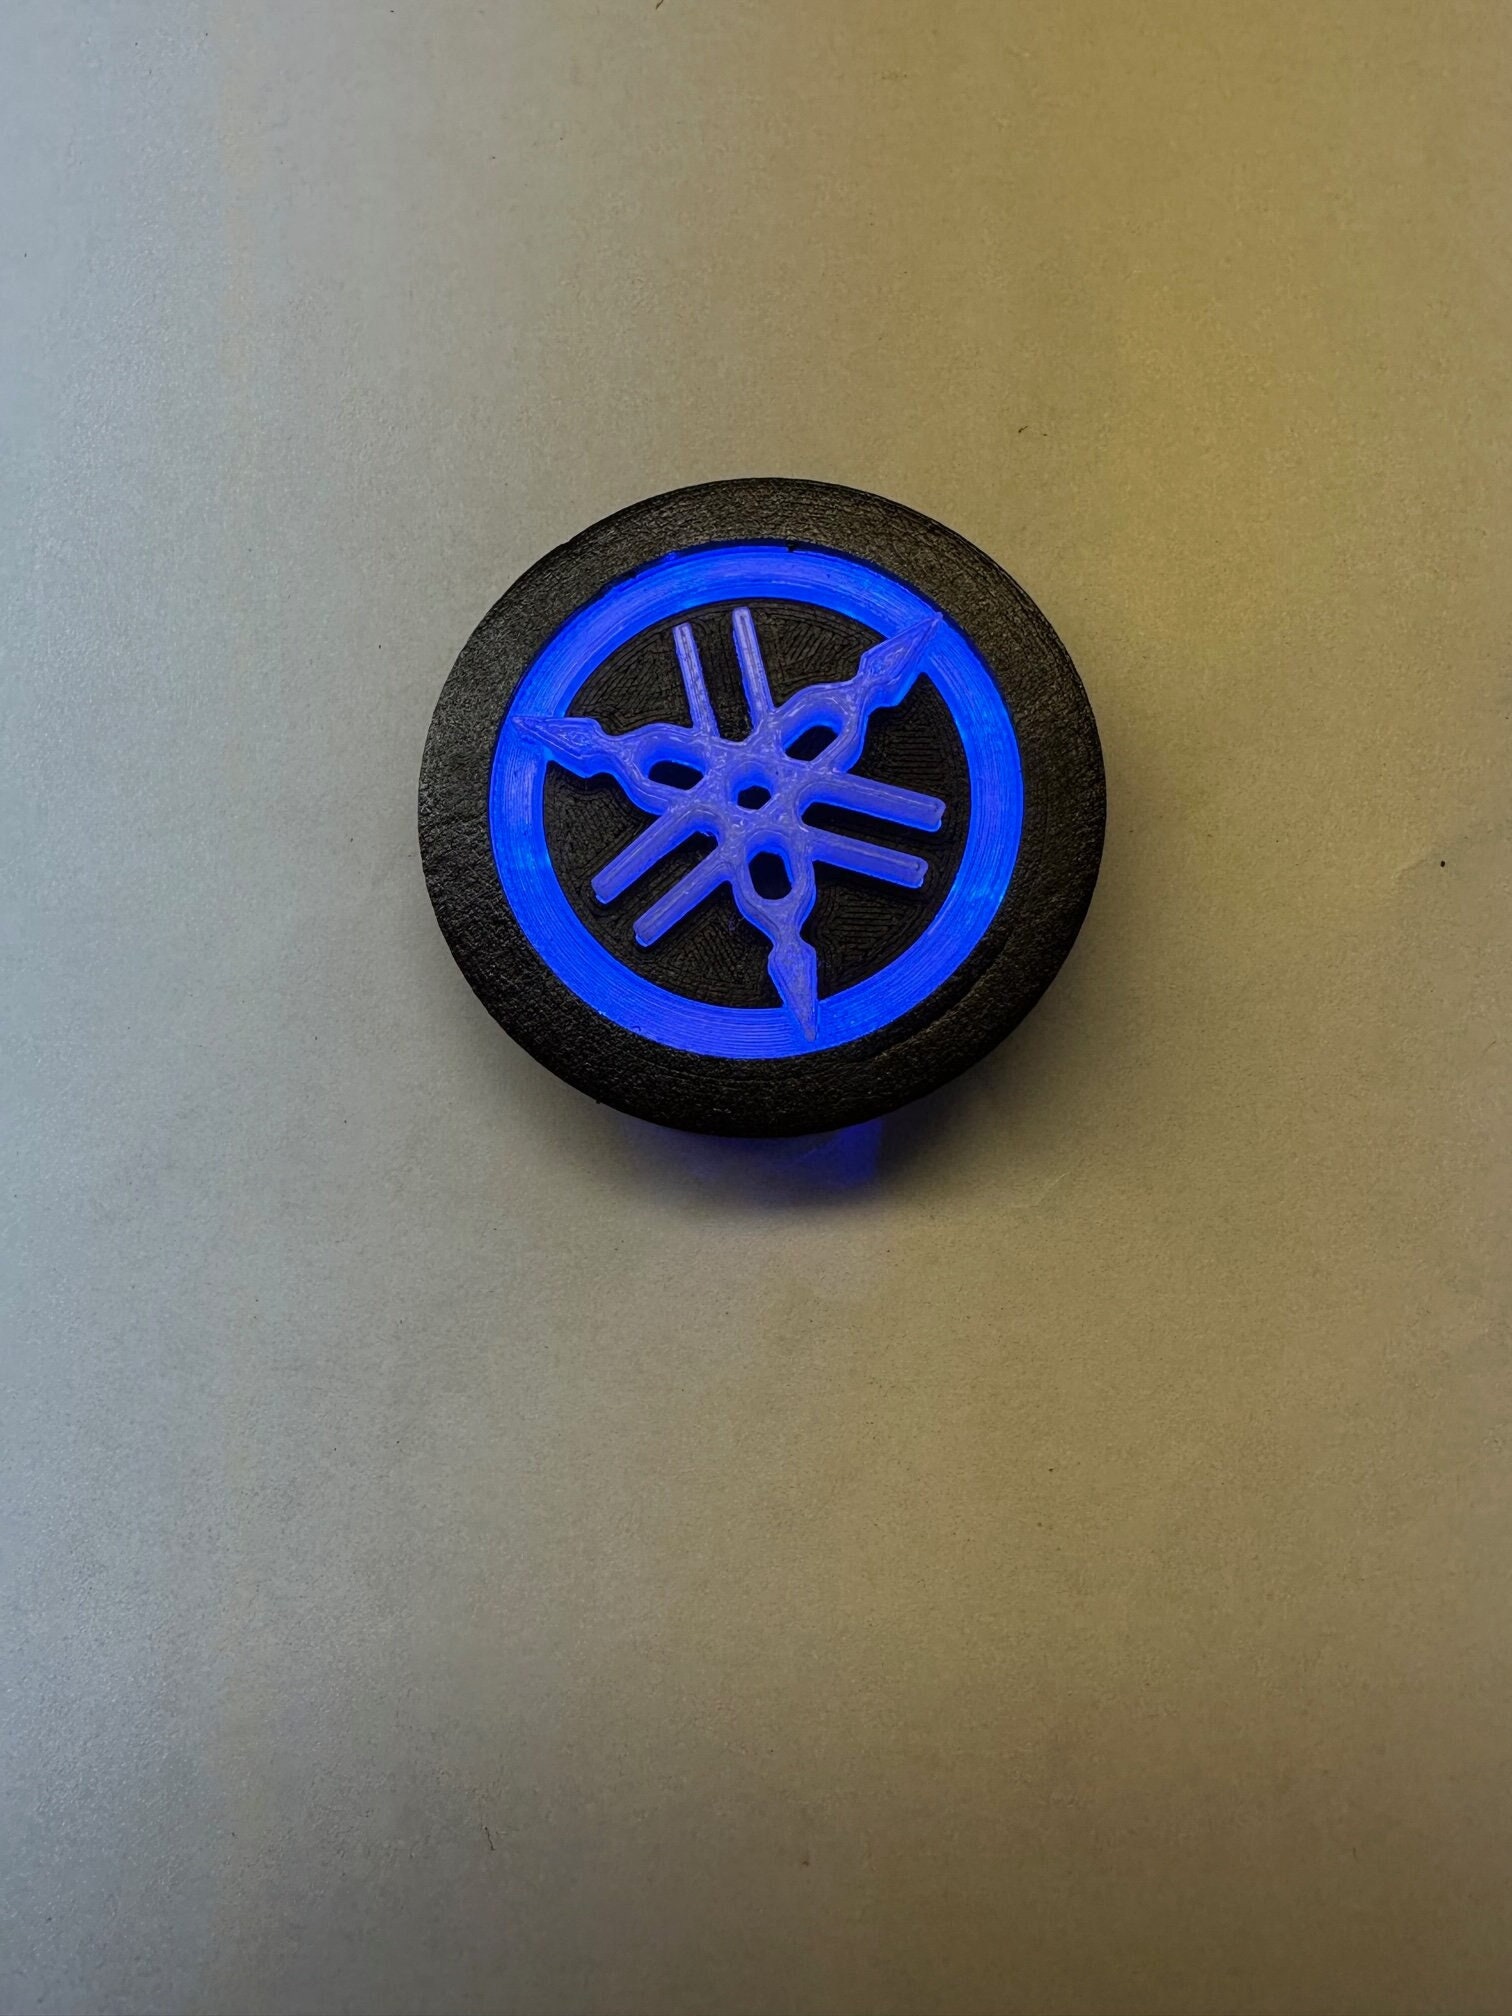 Beleuchtete Custom LOGO Sticker Emblem Aufkleber LED Auto Grill